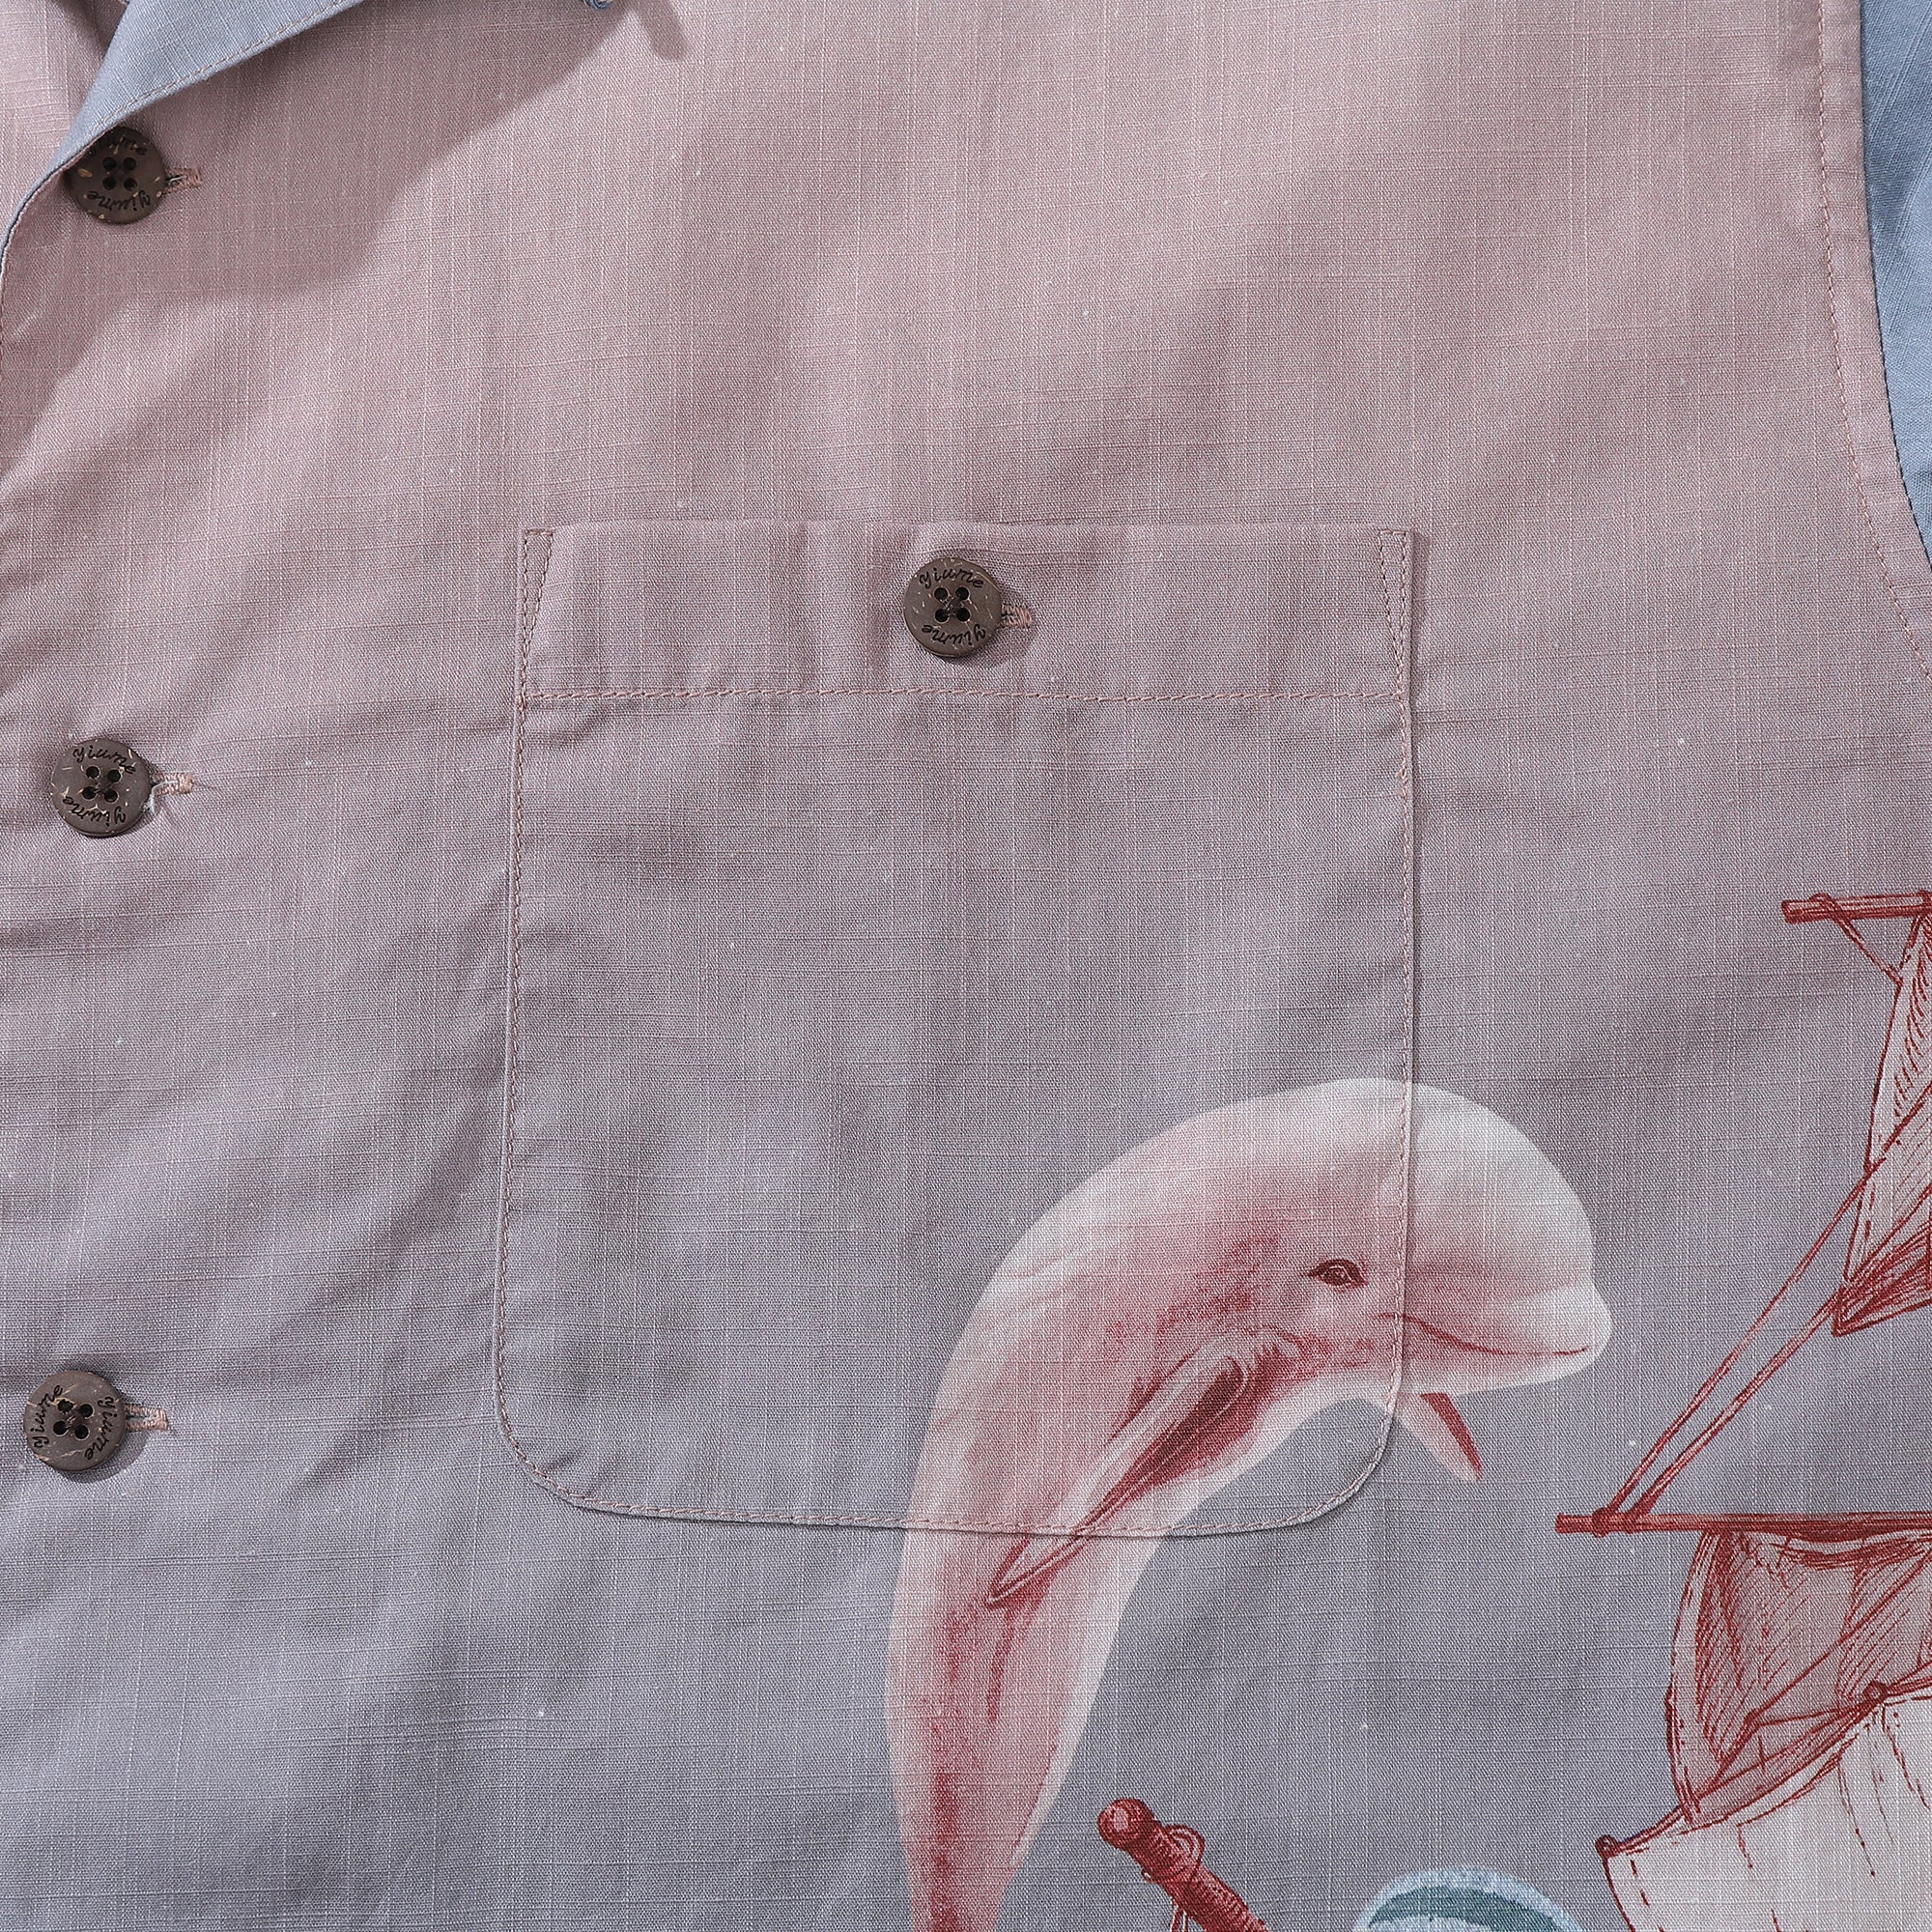 1950s Vintage Hawaiian Shirt For Men Navigation Shirt Camp Collar 100% Cotton